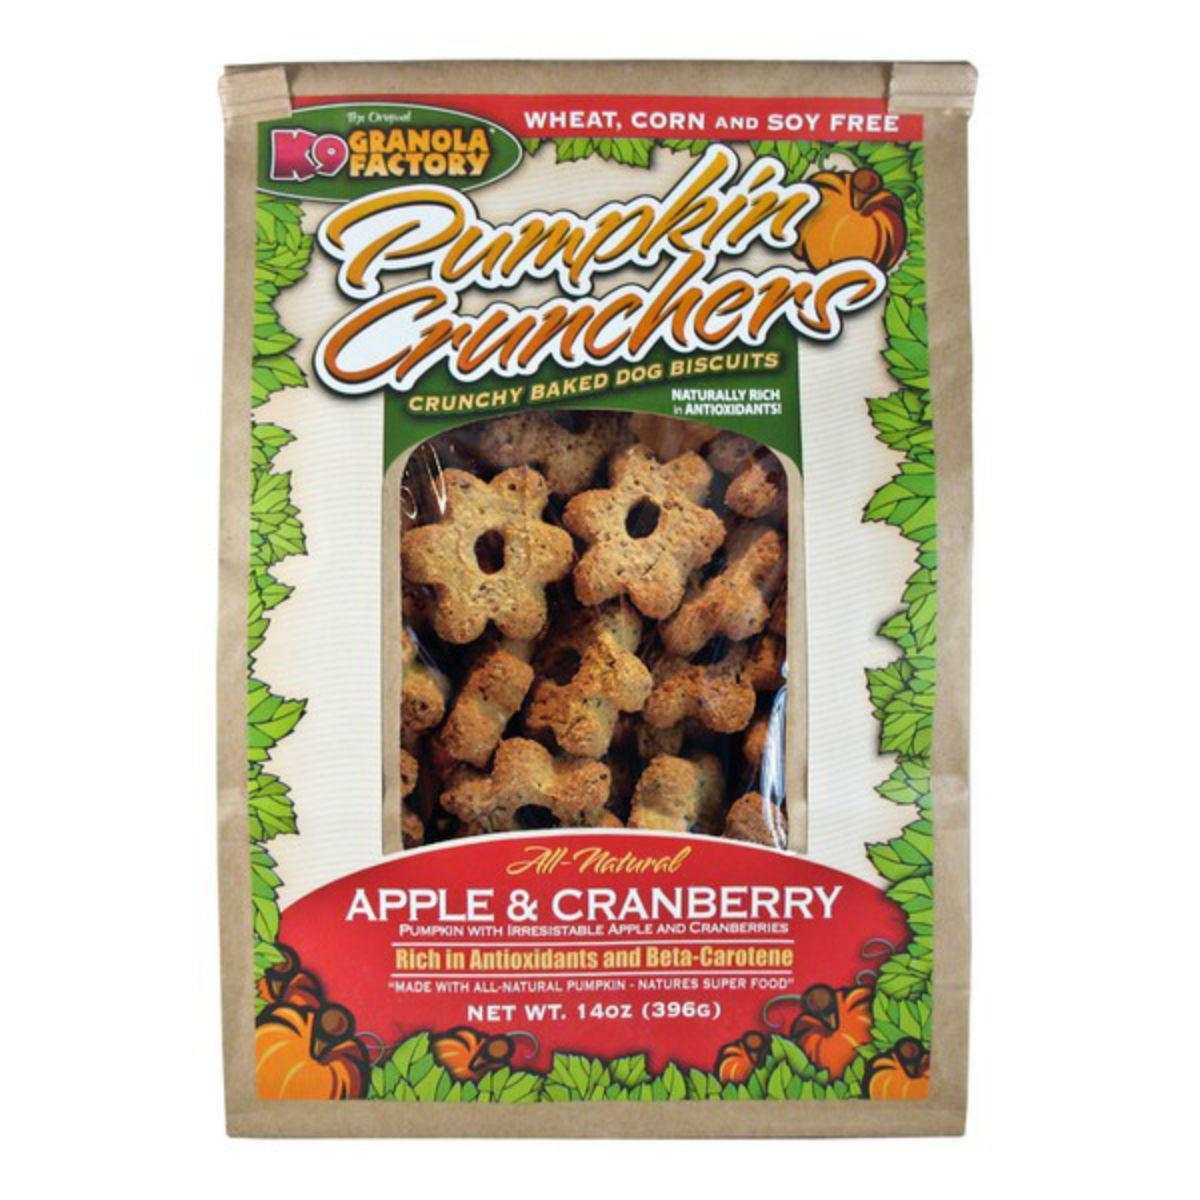 K9 Granola Factory Pumpkin Crunchers Dog Treats - Apple & Cranberry